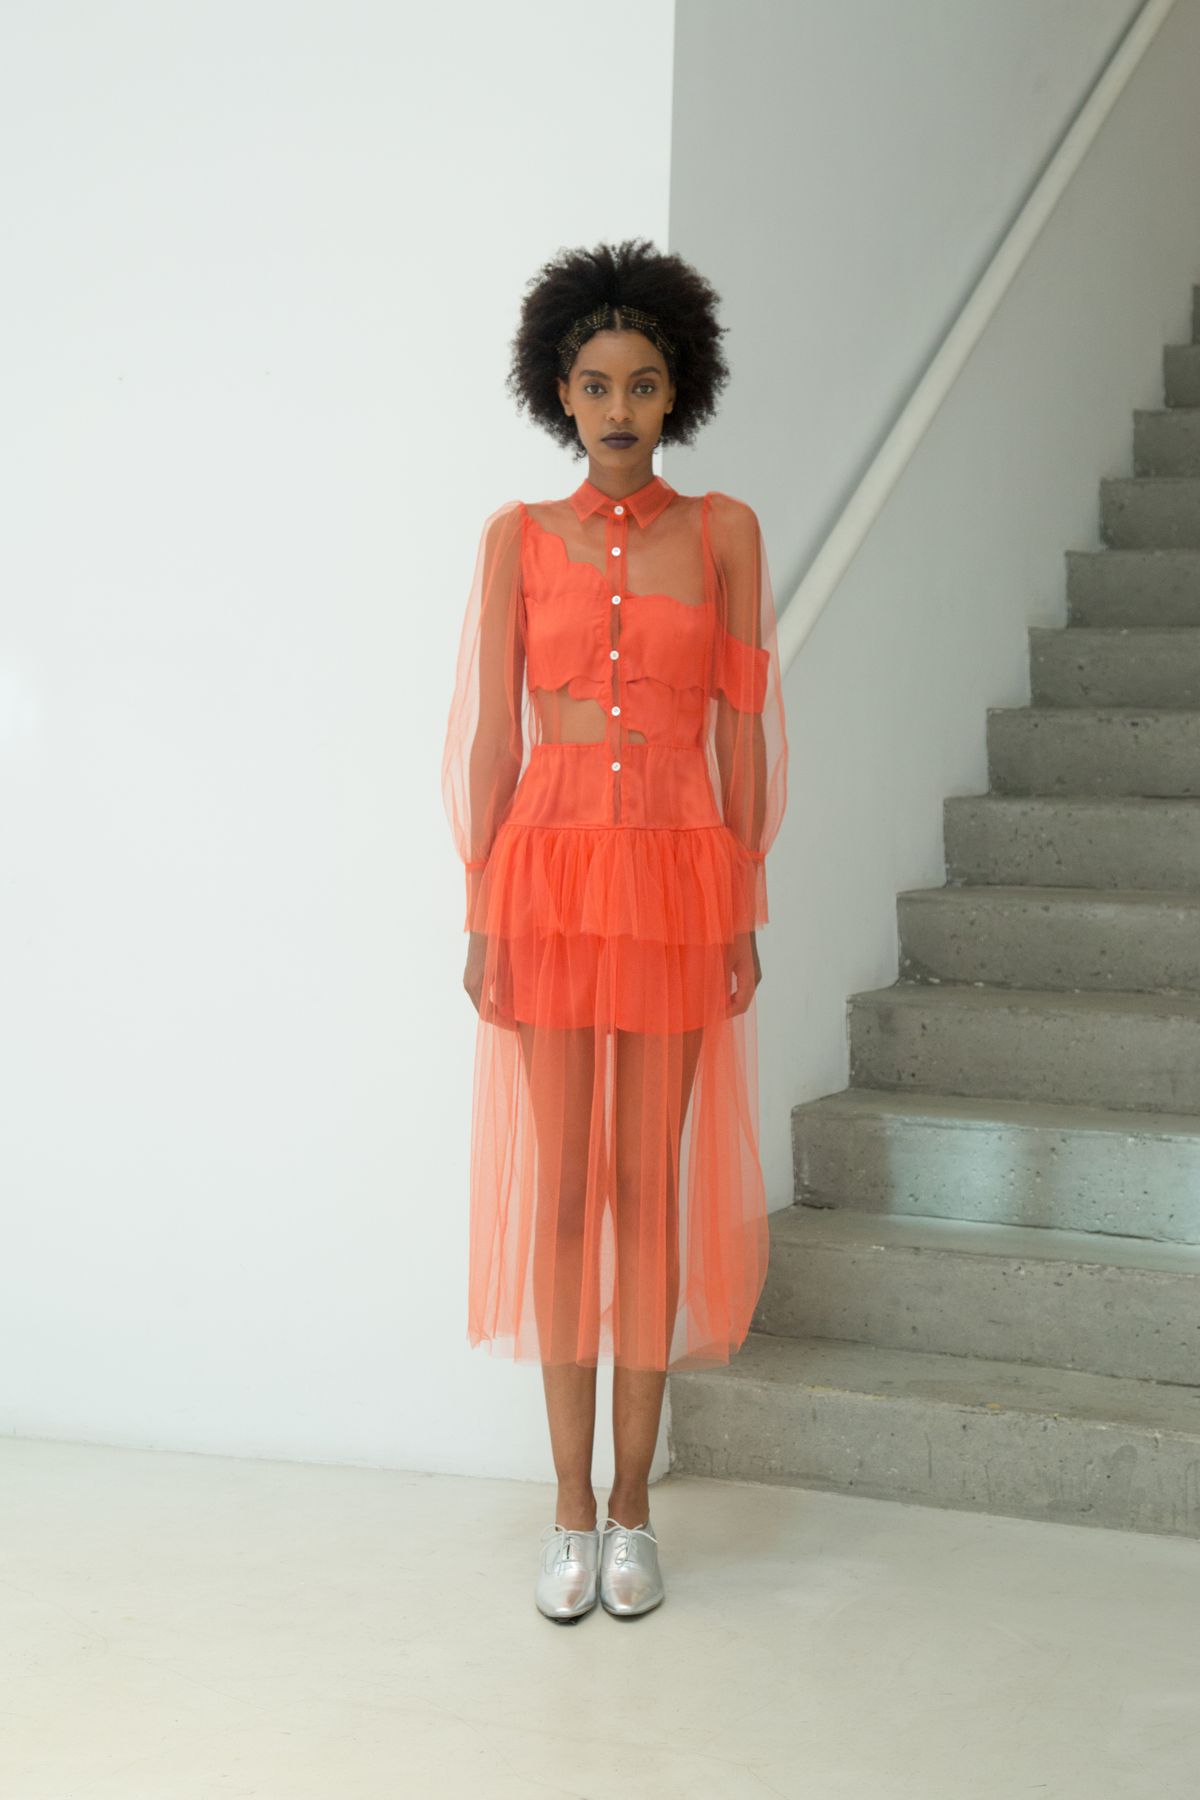 An orange sheer dress